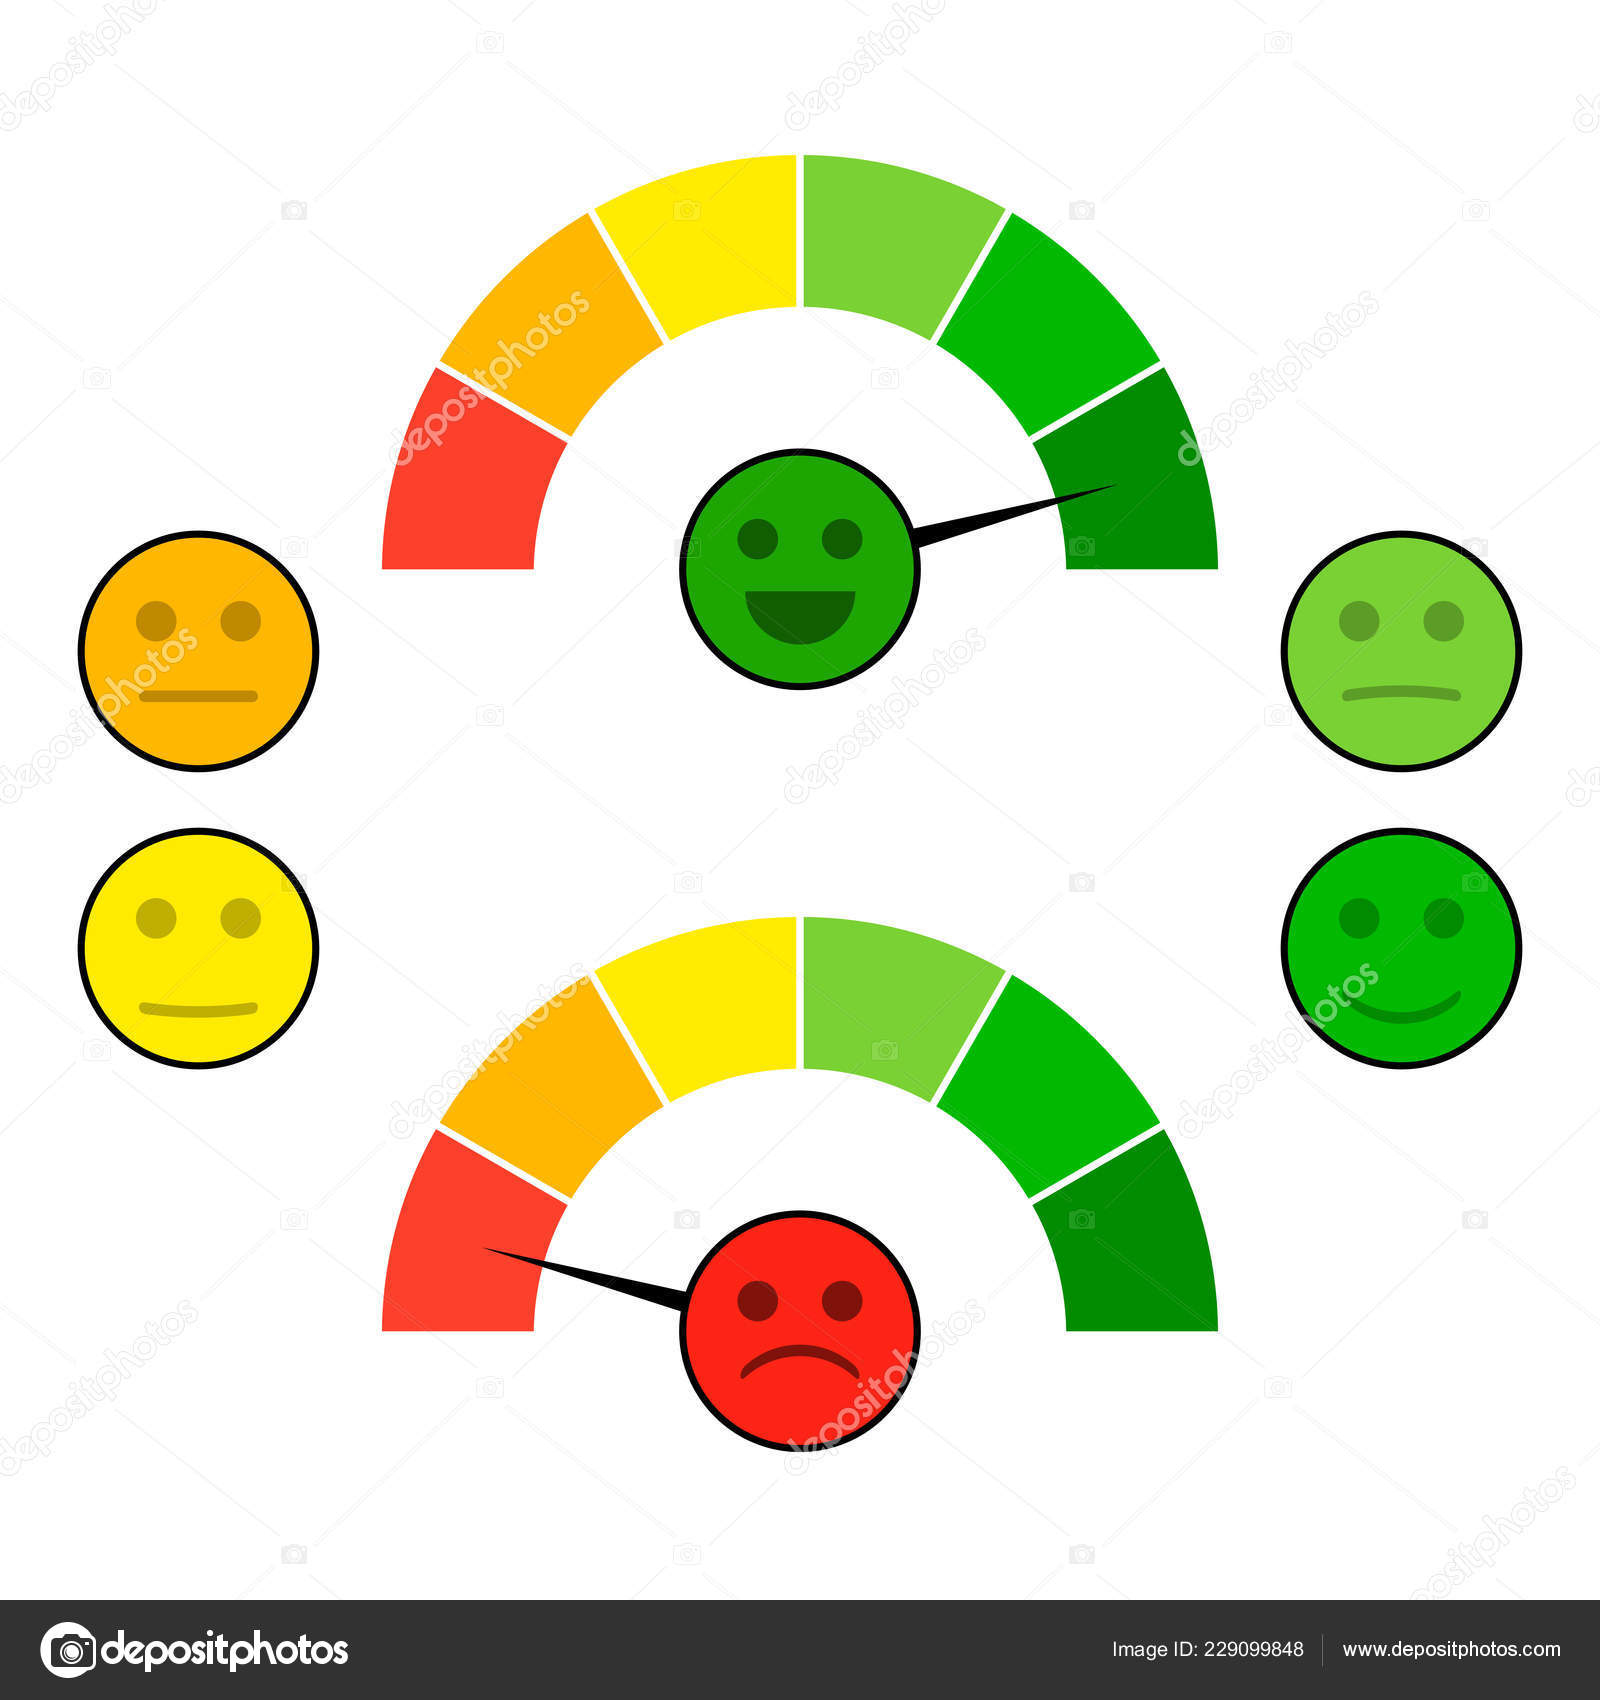 Mood Indicator Chart